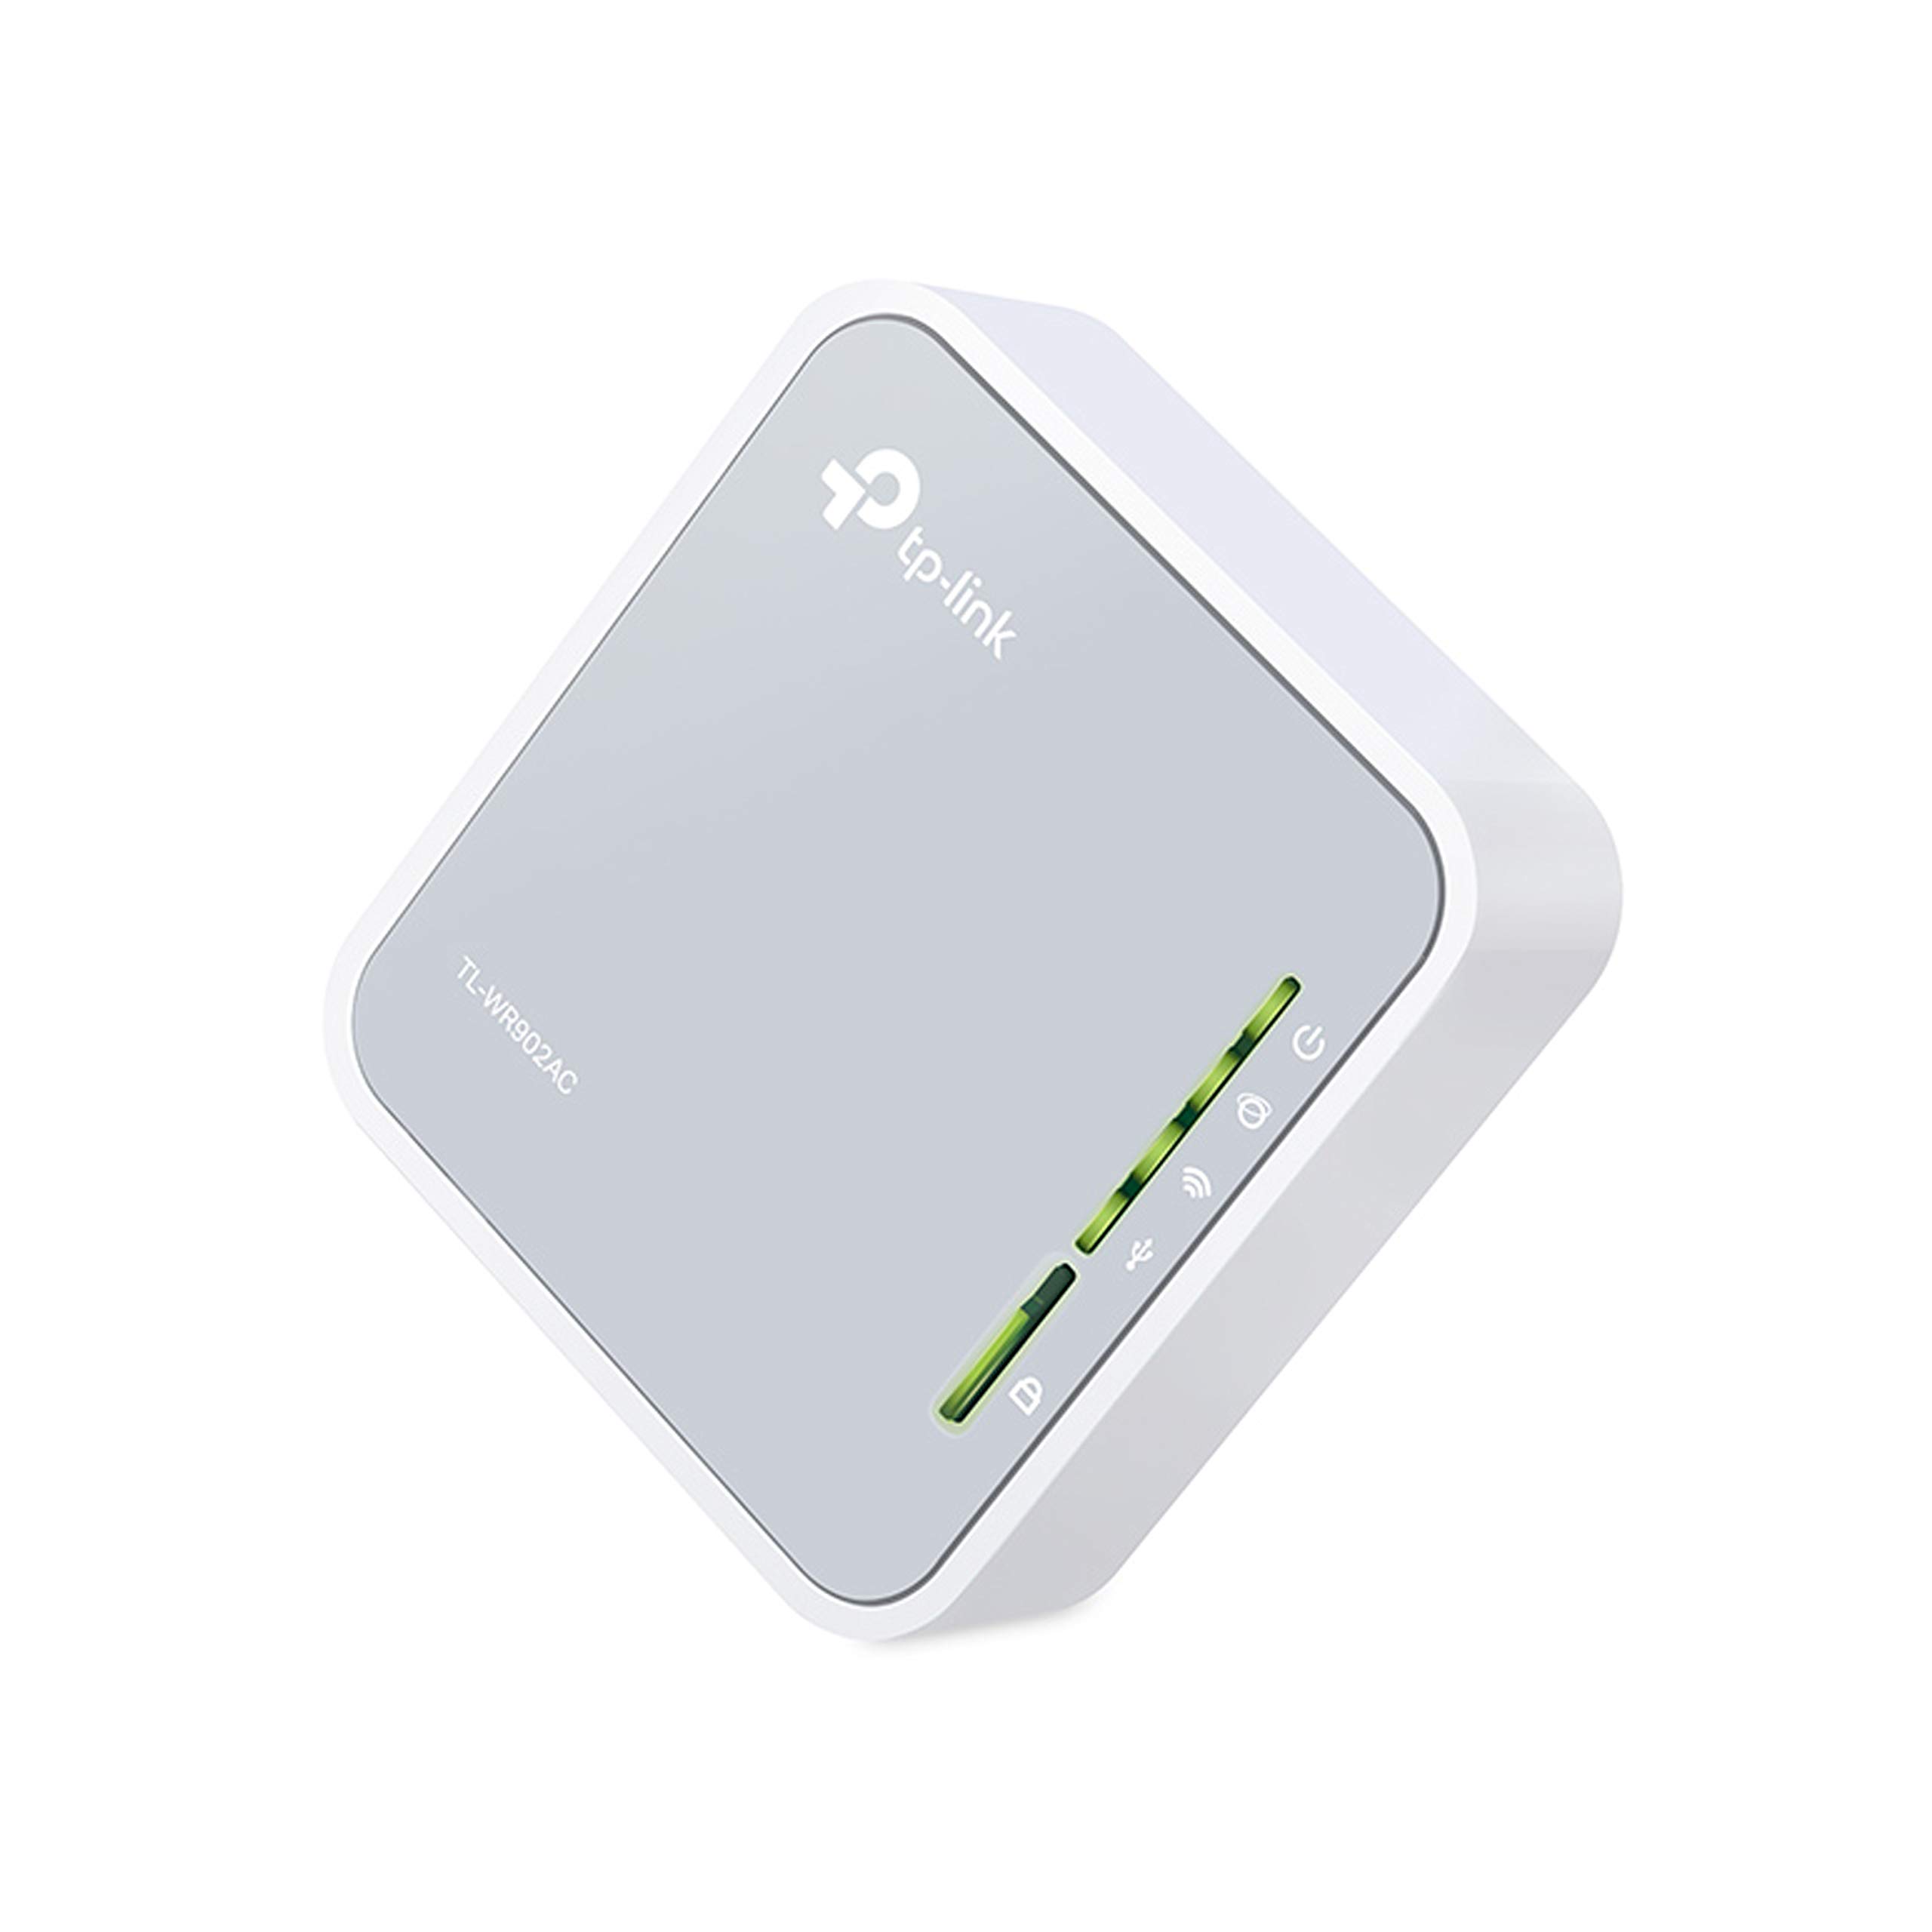 TP-Link AC750 Wireless Portable Nano Travel Router(TL-WR902AC) - Support Multiple Modes,Hotspot/Bridge/Range Extender/Access Point/Client Modes, Dual Band WiFi, 1 USB 2.0 Port